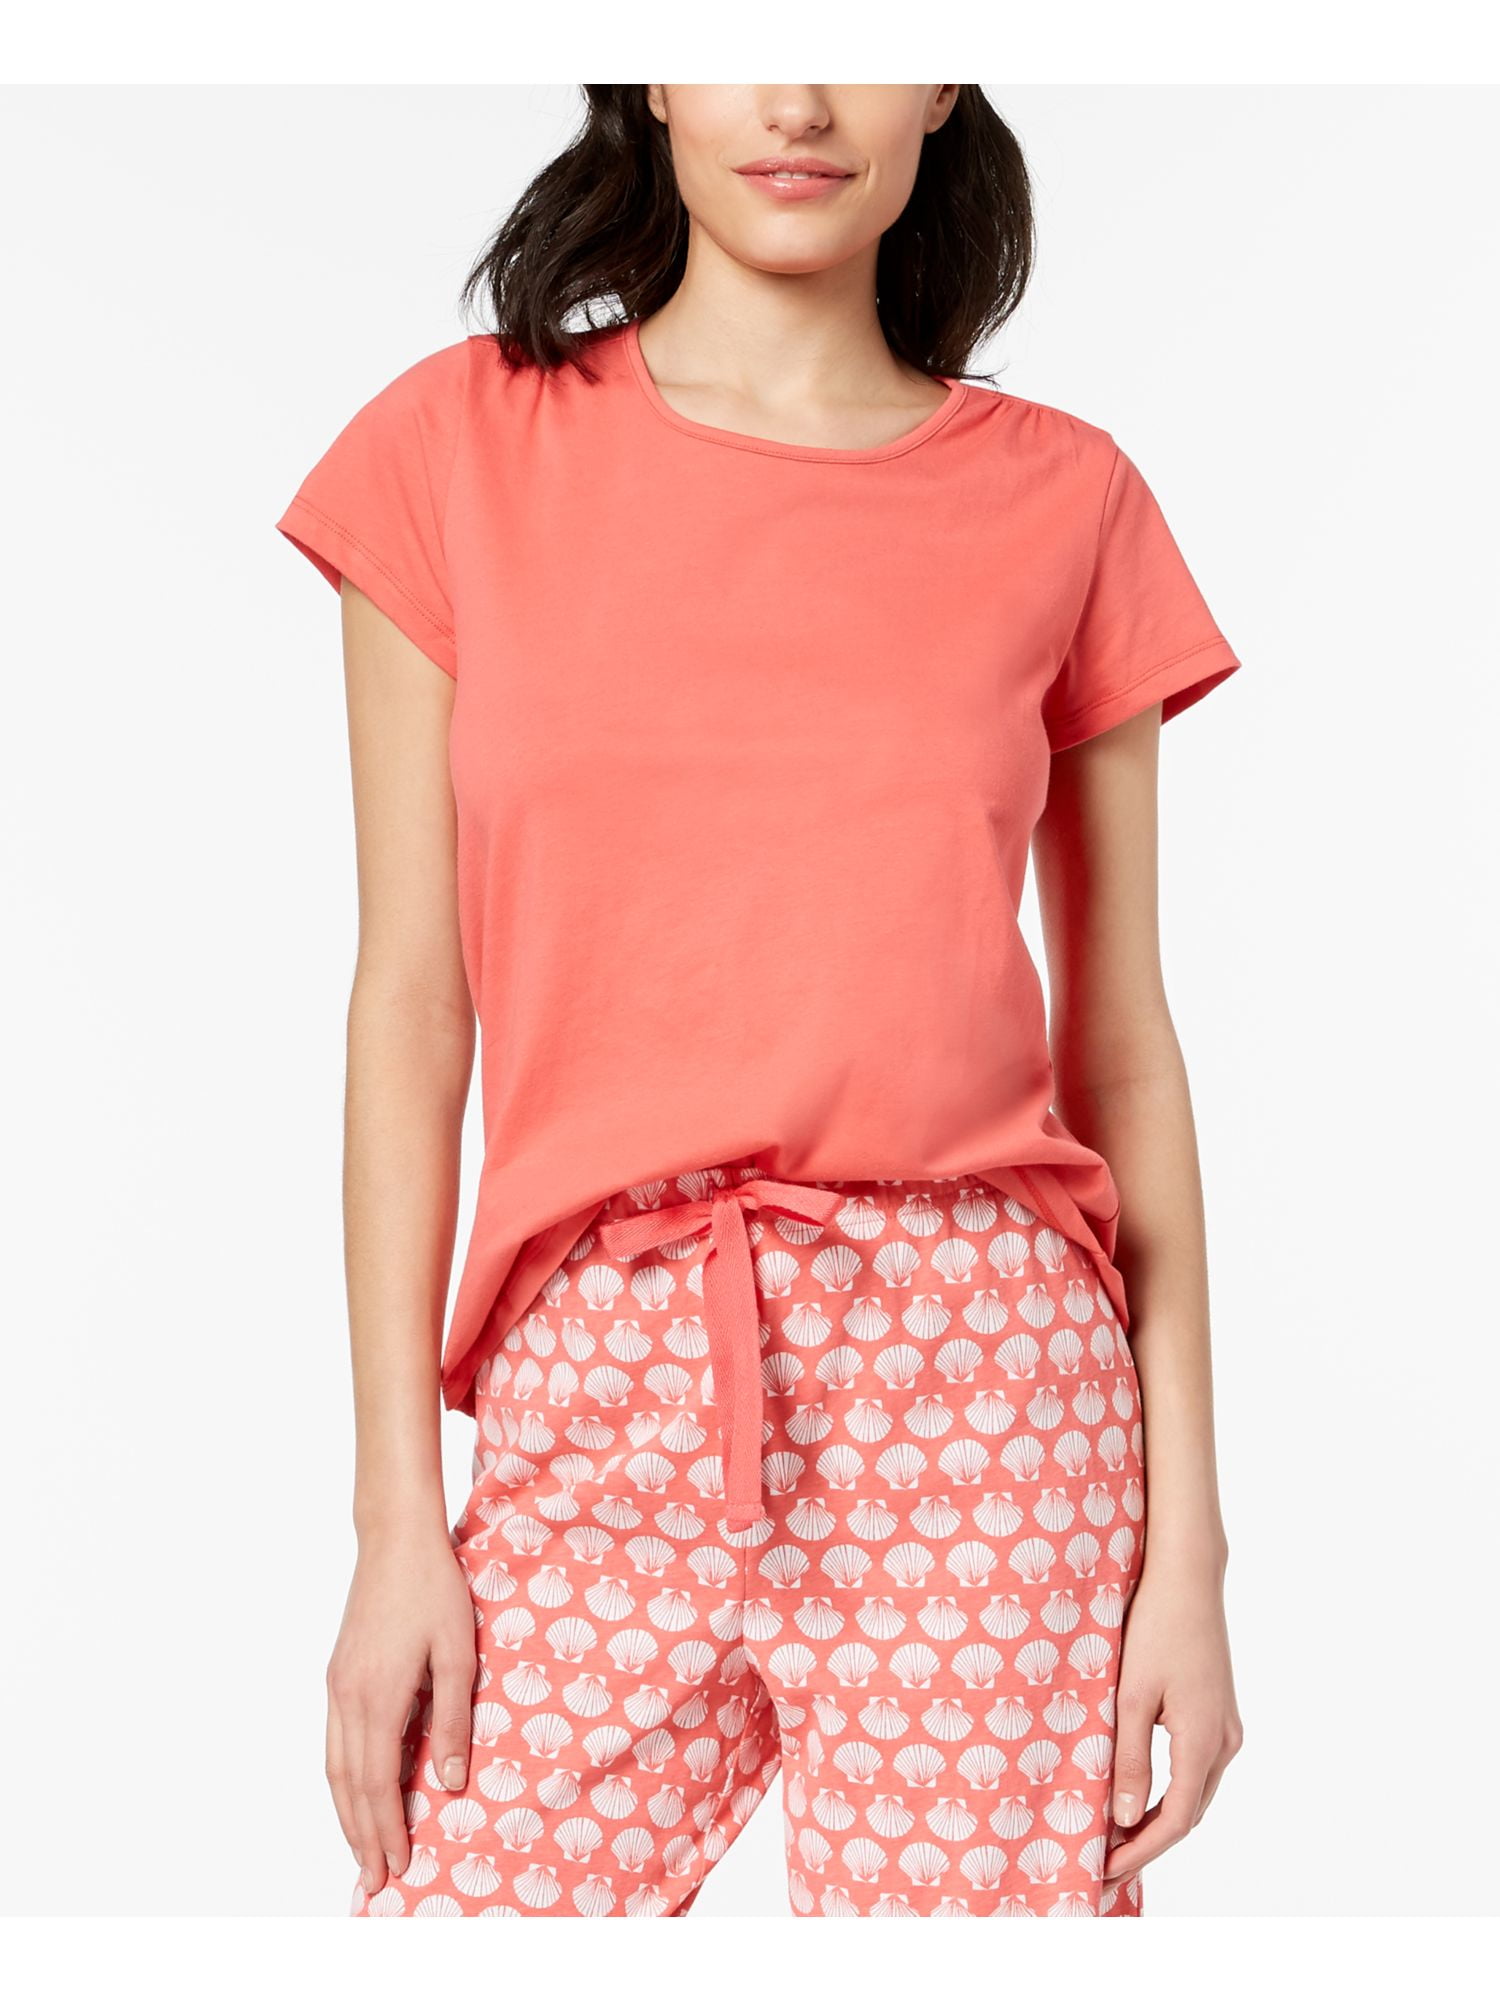 CHARTER CLUB Intimates Coral Sleepwear Shirt Size: S 